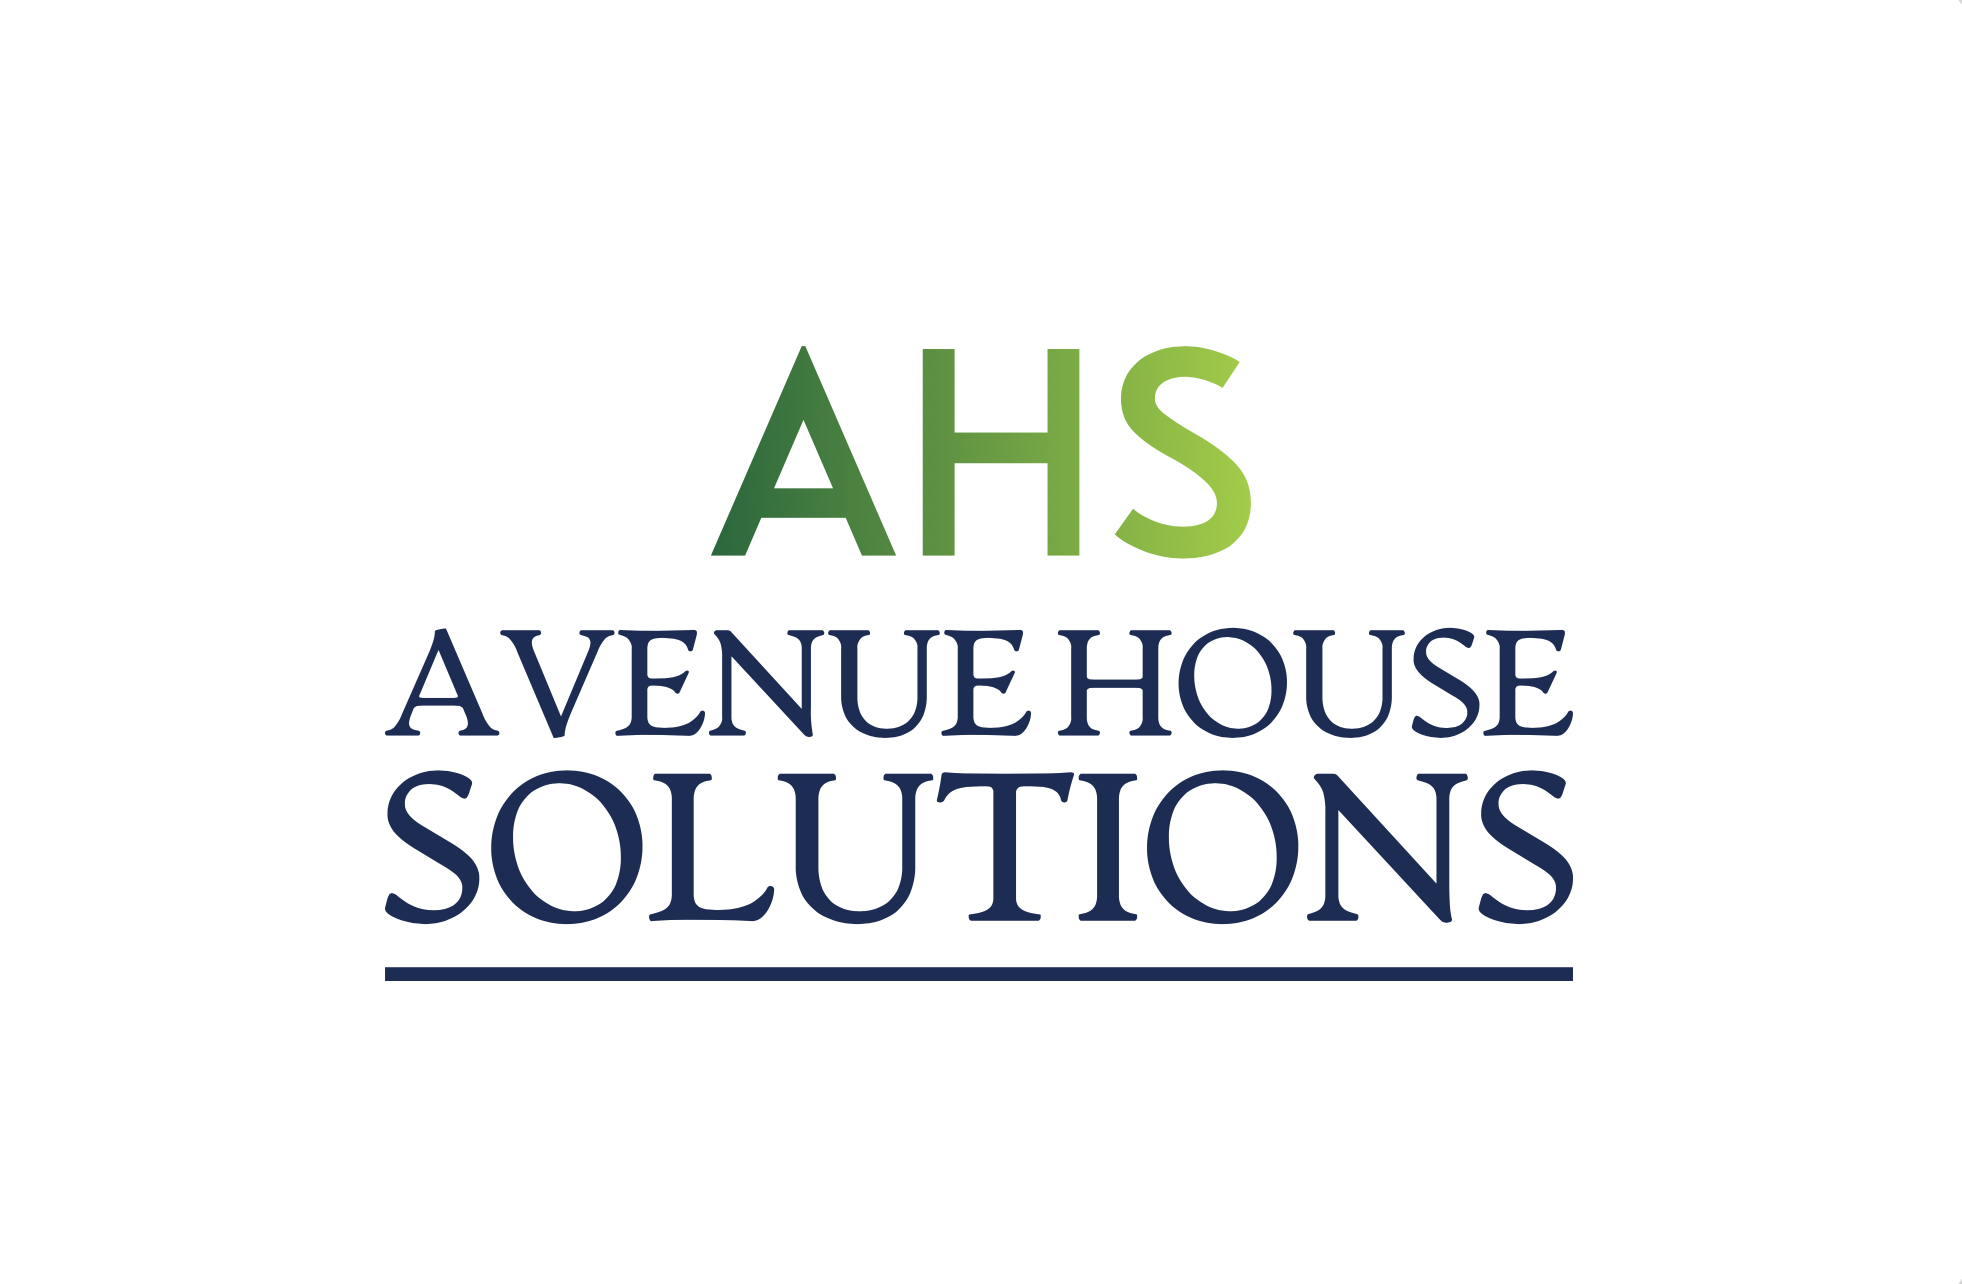 Avenue House Solutions logo